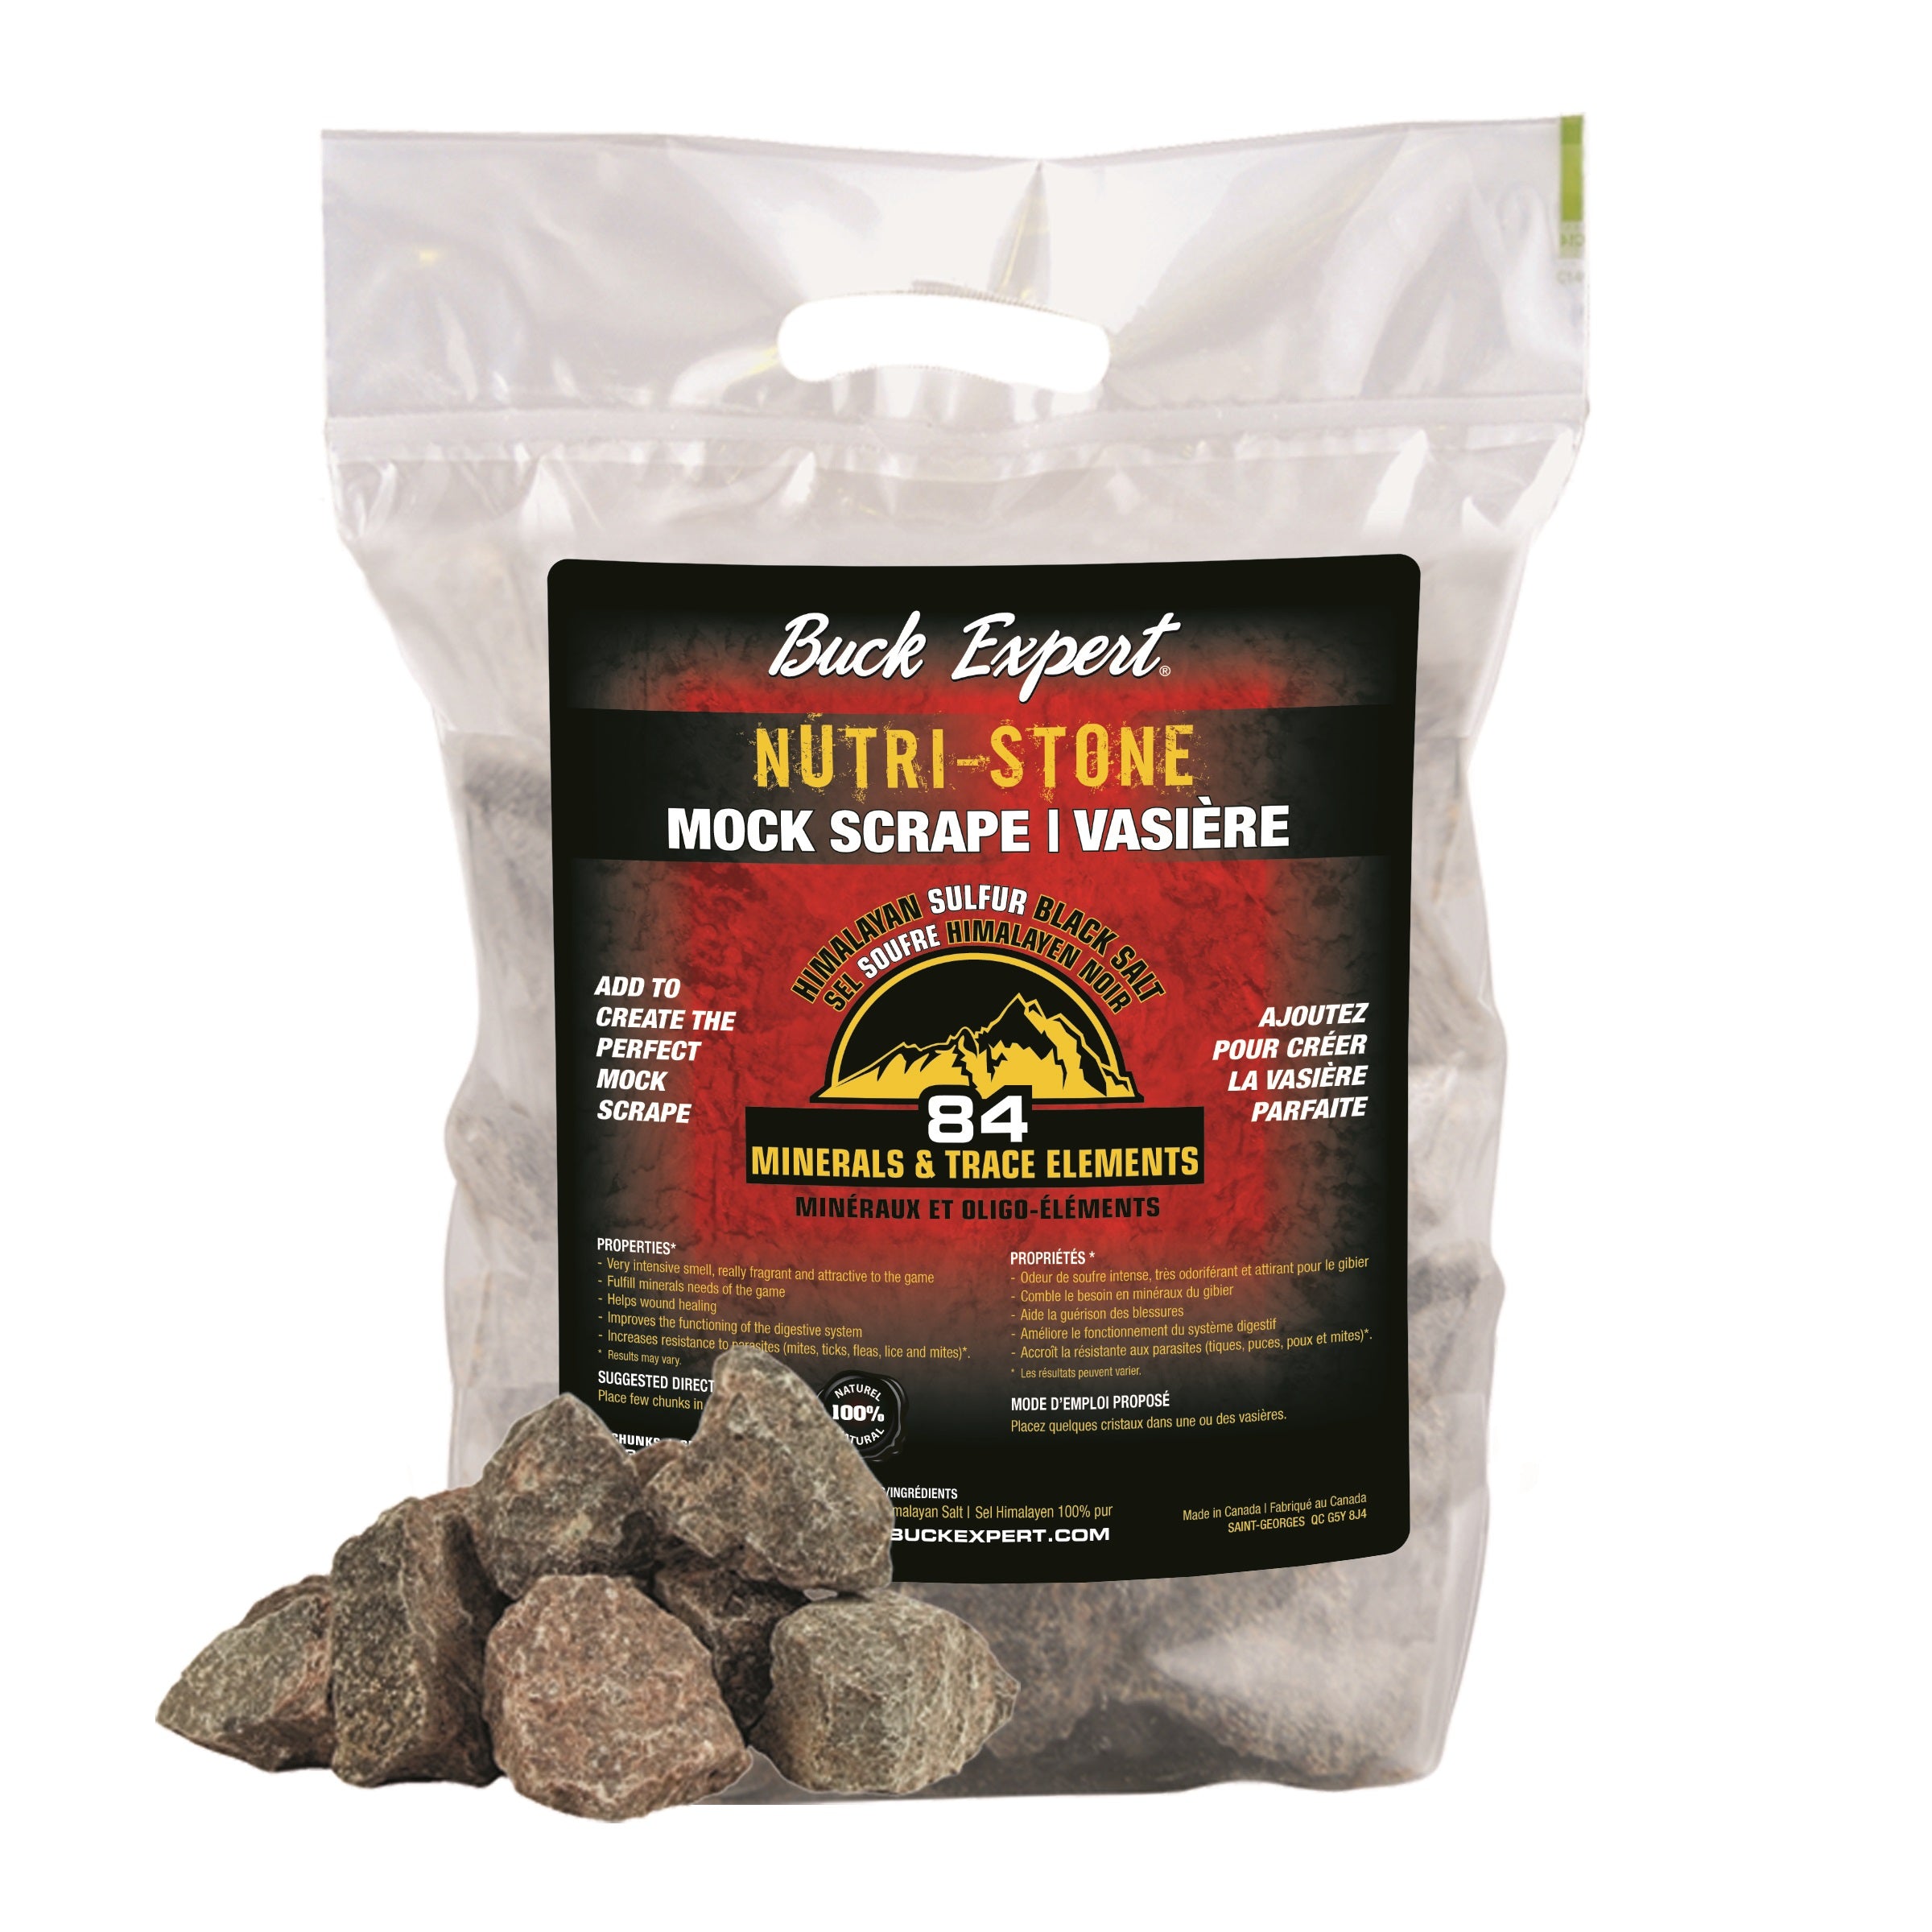 Sel himalayen en roches noires Nutri-Stone - 1.5kg||Himalayan salt Nutri-stoneblack stone - 1.5kg